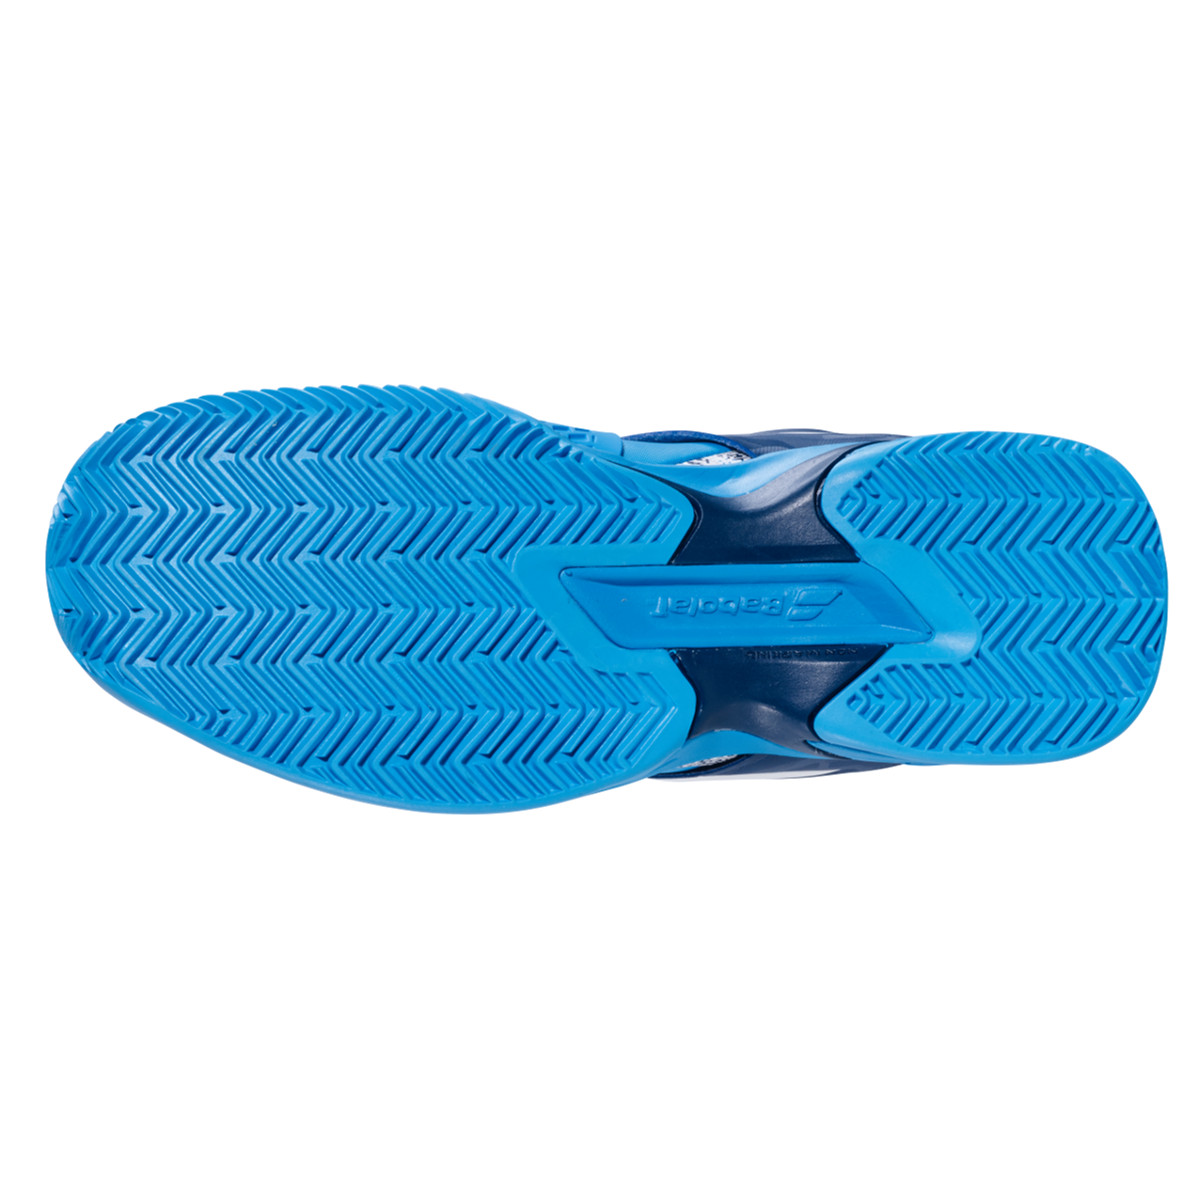 Babolat Propulse Clay Tennisschuhe Junior blau NEU Kinderschuhe UVP 55,00€ 